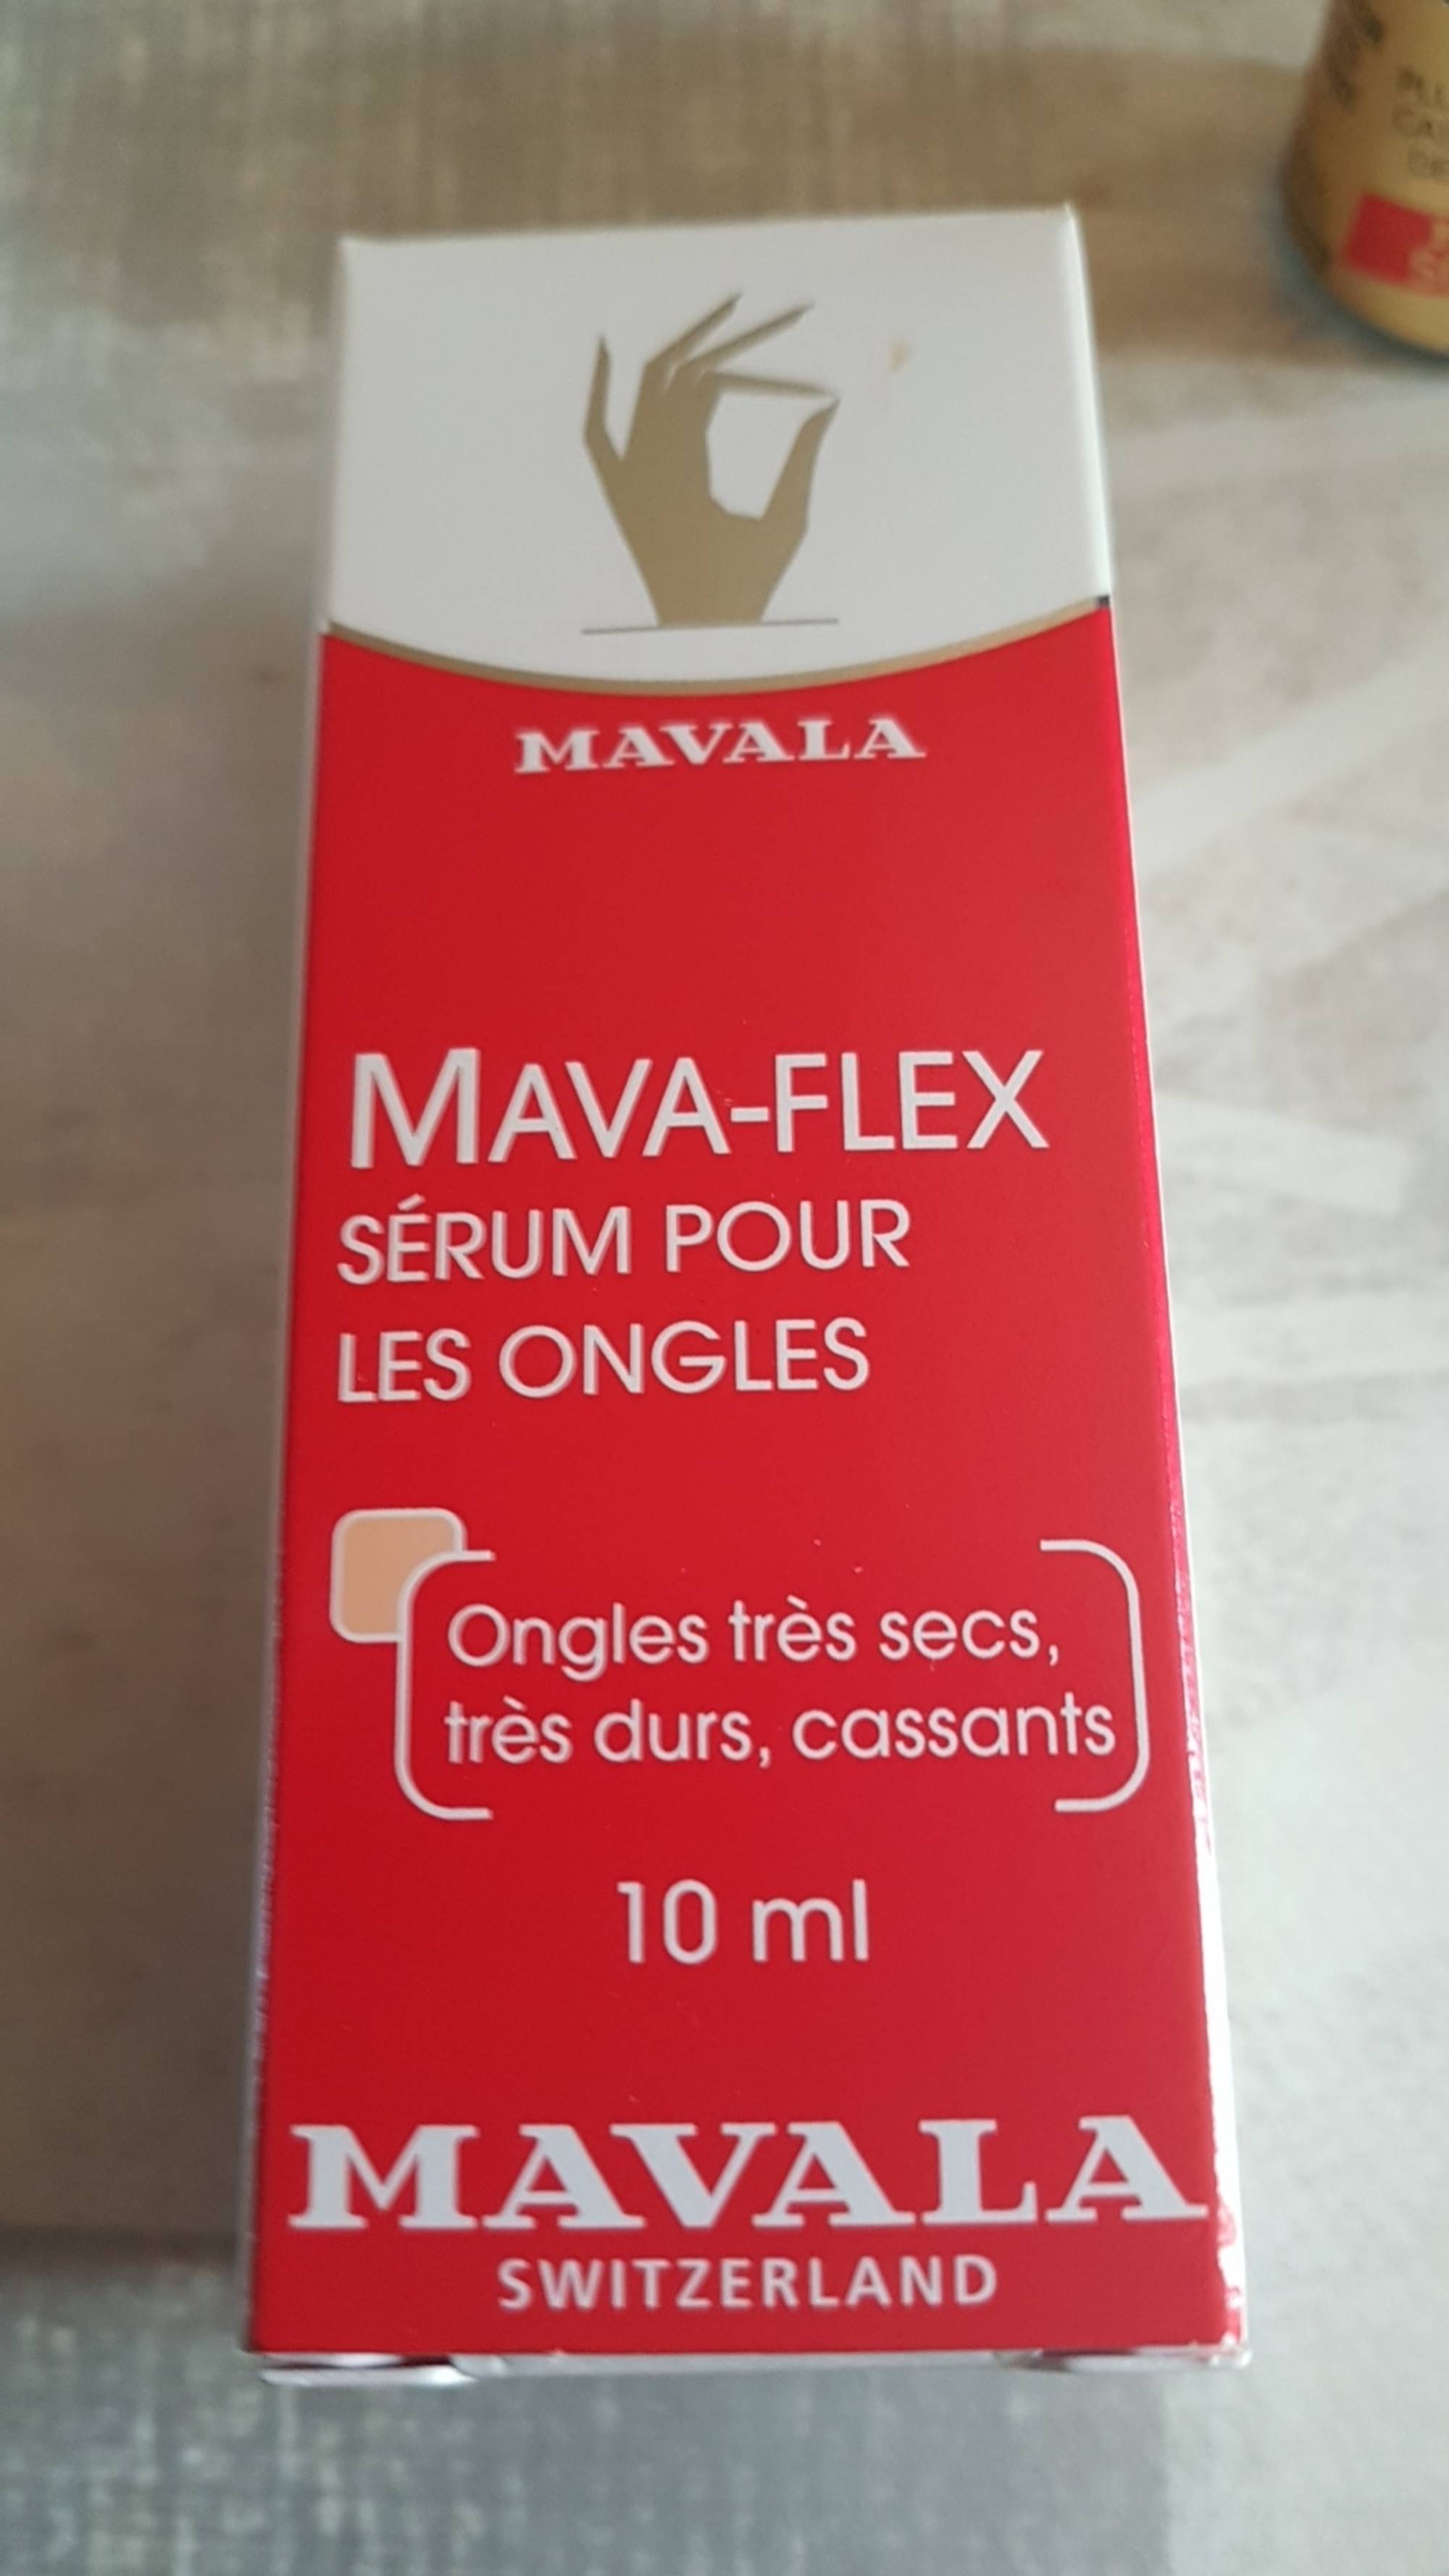 MAVALA - Mava flex - Sérum pour les ongles